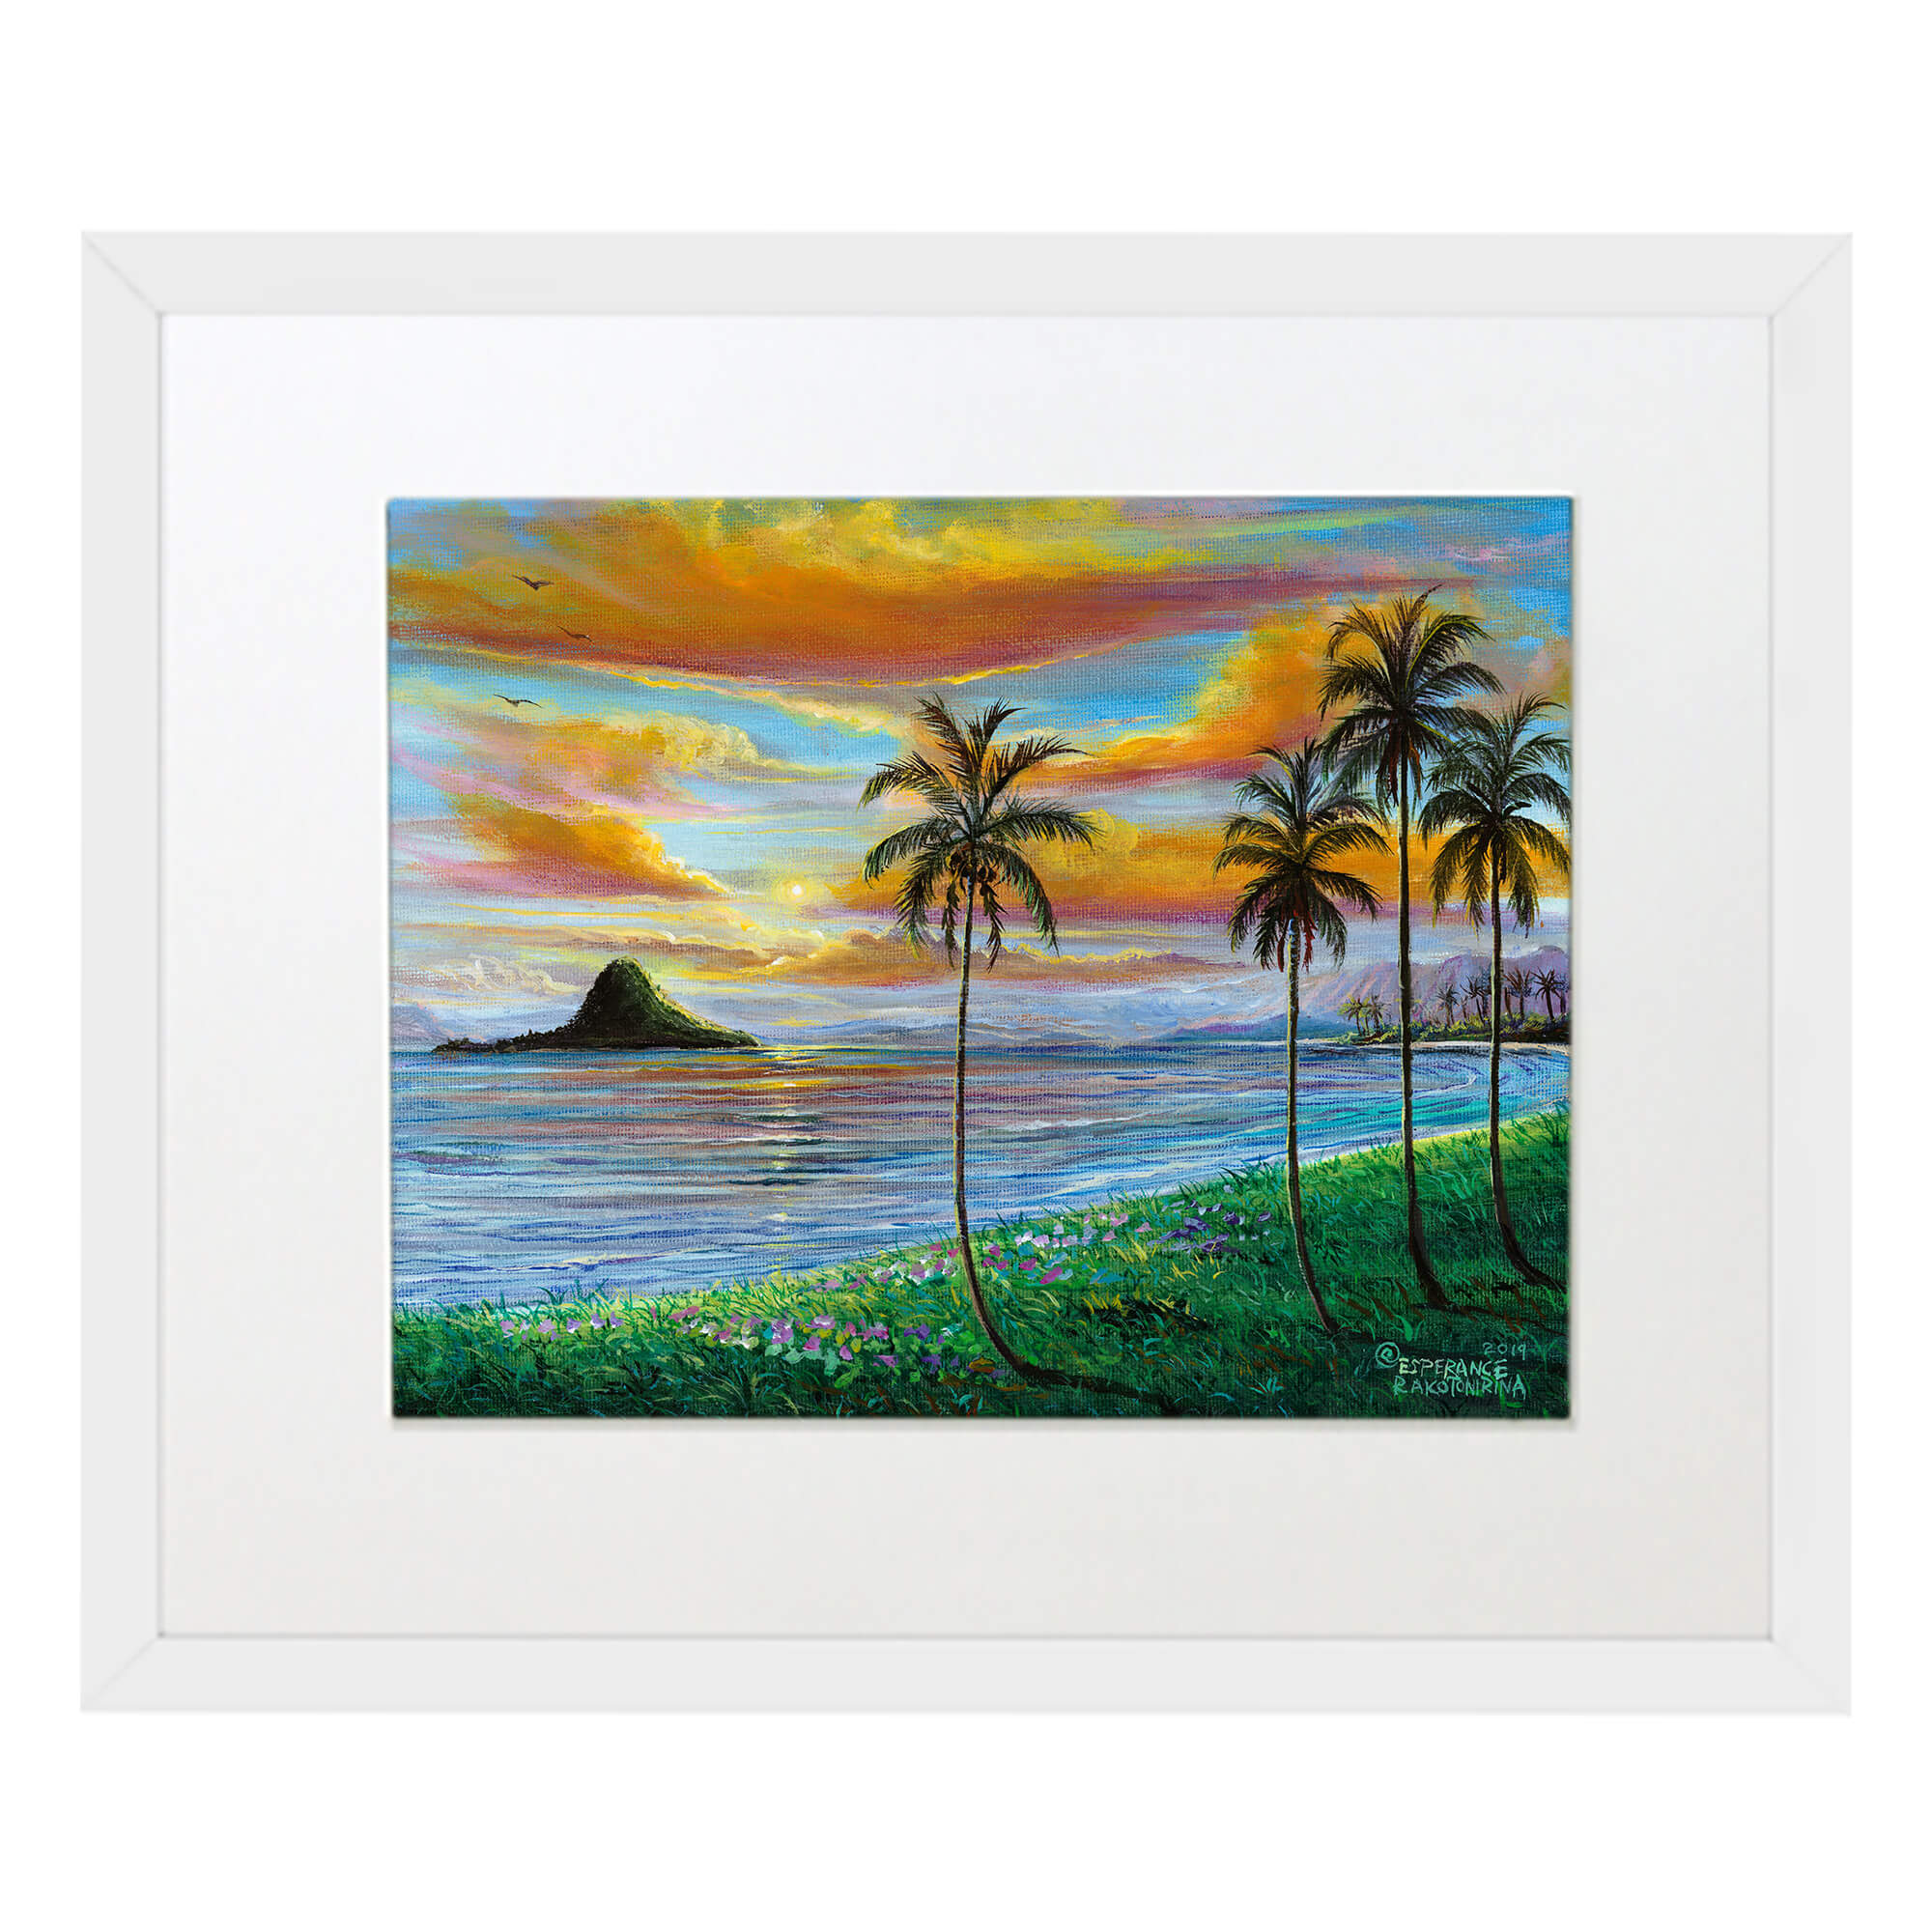 Matted art print with white frame showcasing the vibrant colors of the sky  by hawaii artist Esperance Rakotonirina